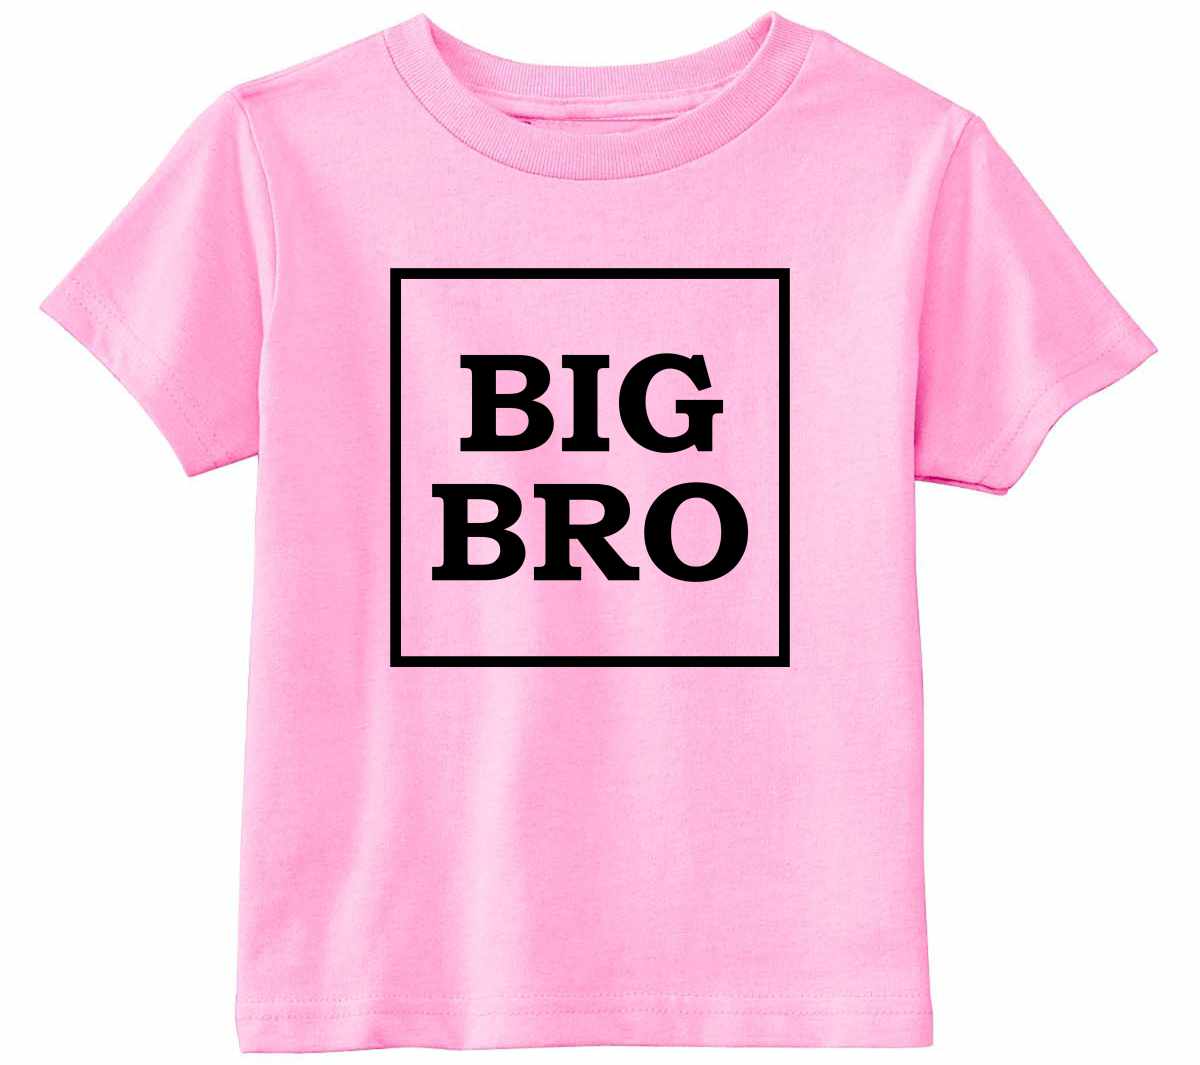 Big Bro on Infant-Toddler T-Shirt (#1246-7)